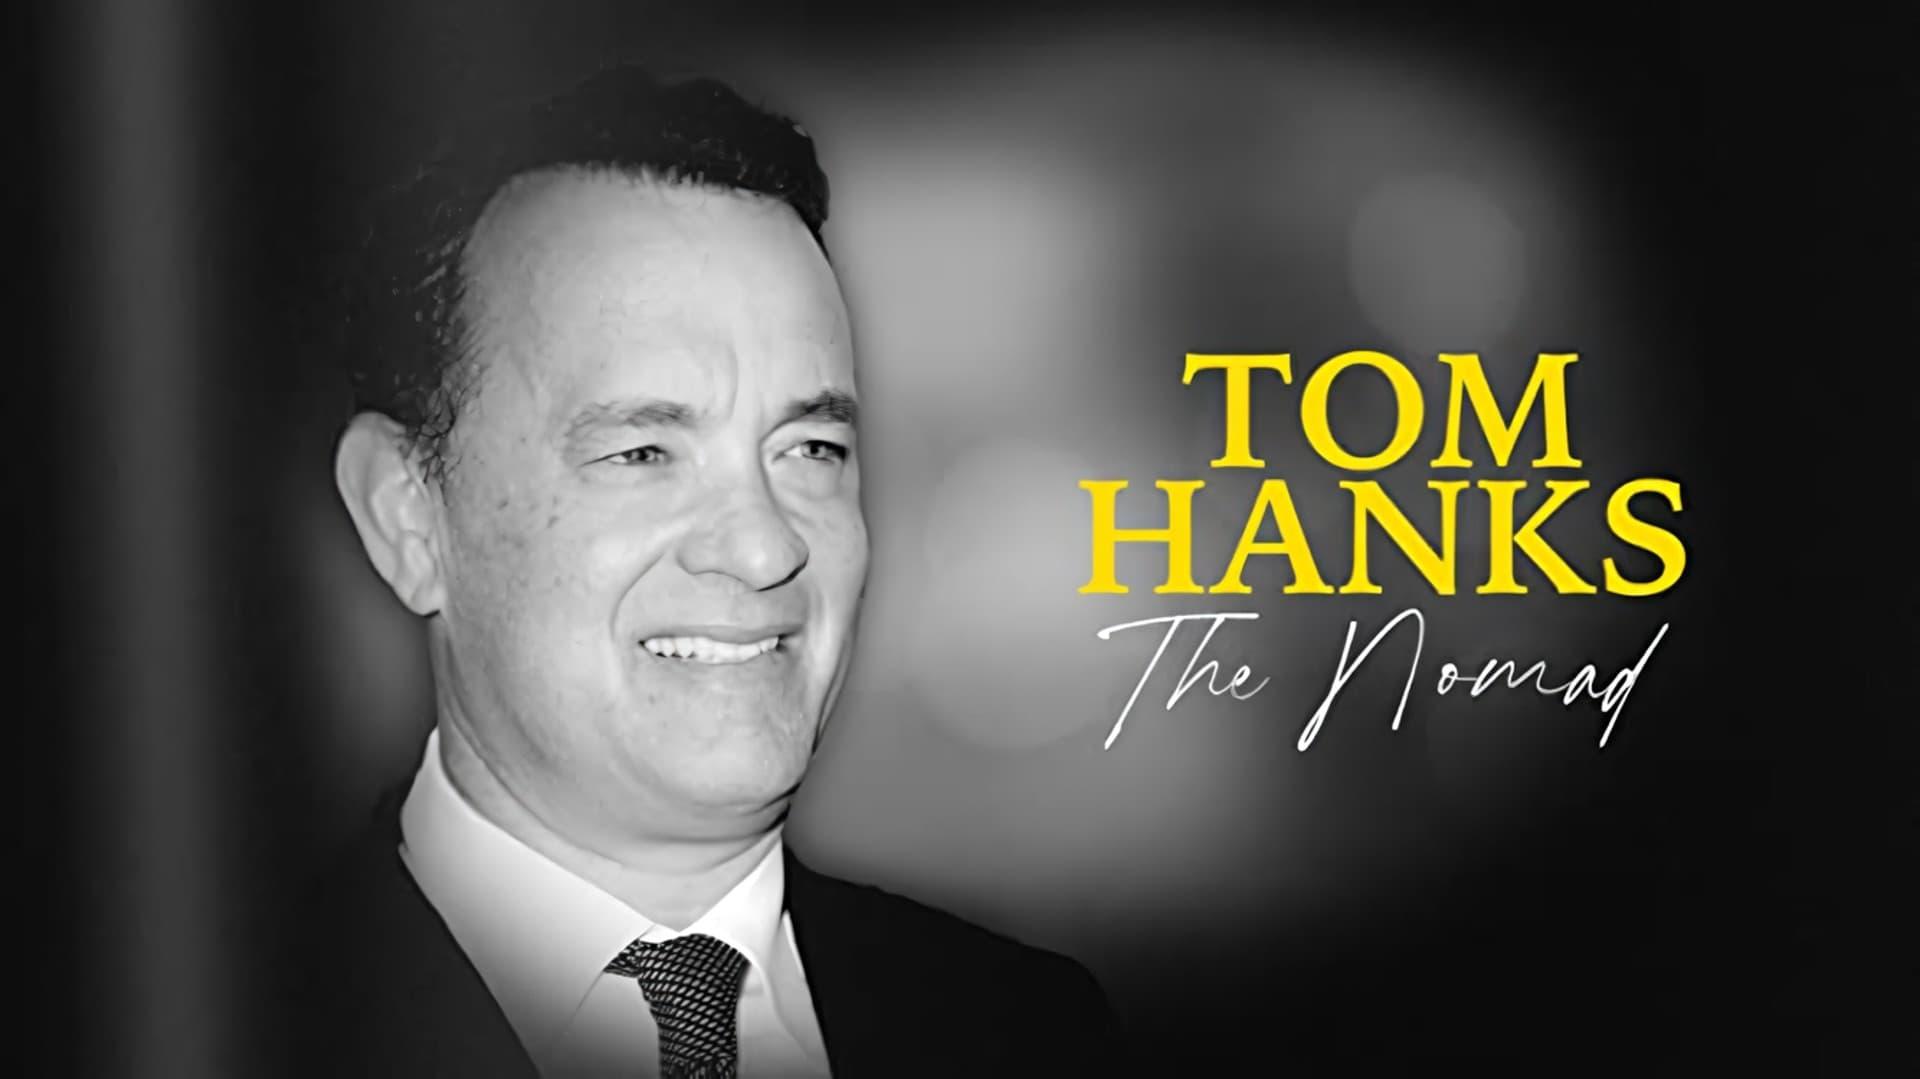 Tom Hanks: The Nomad backdrop